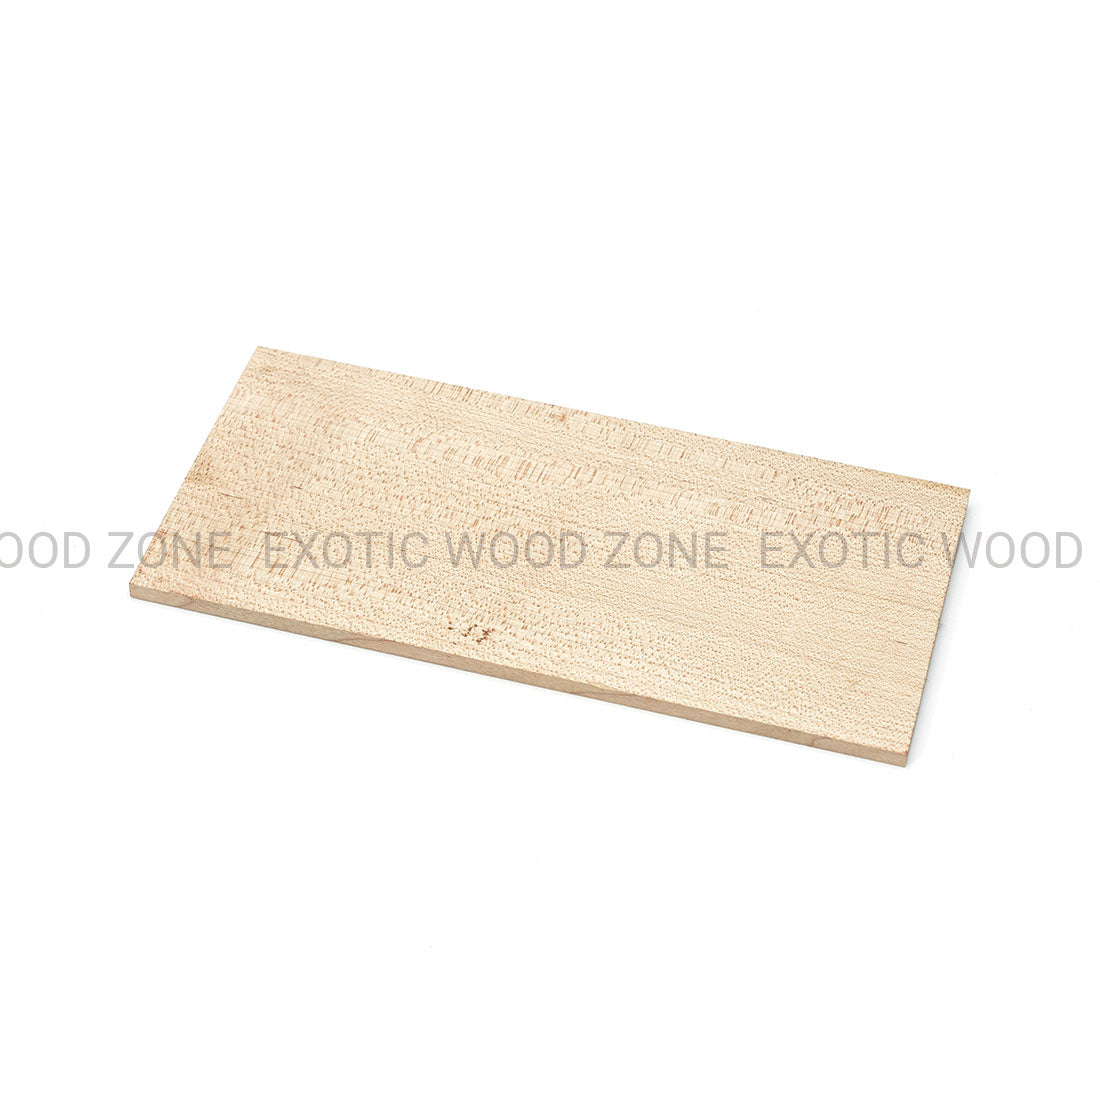 Hard Maple Quarter Cut Music Grade Headplate Wood Blank Exotic Wood Zone Headplates